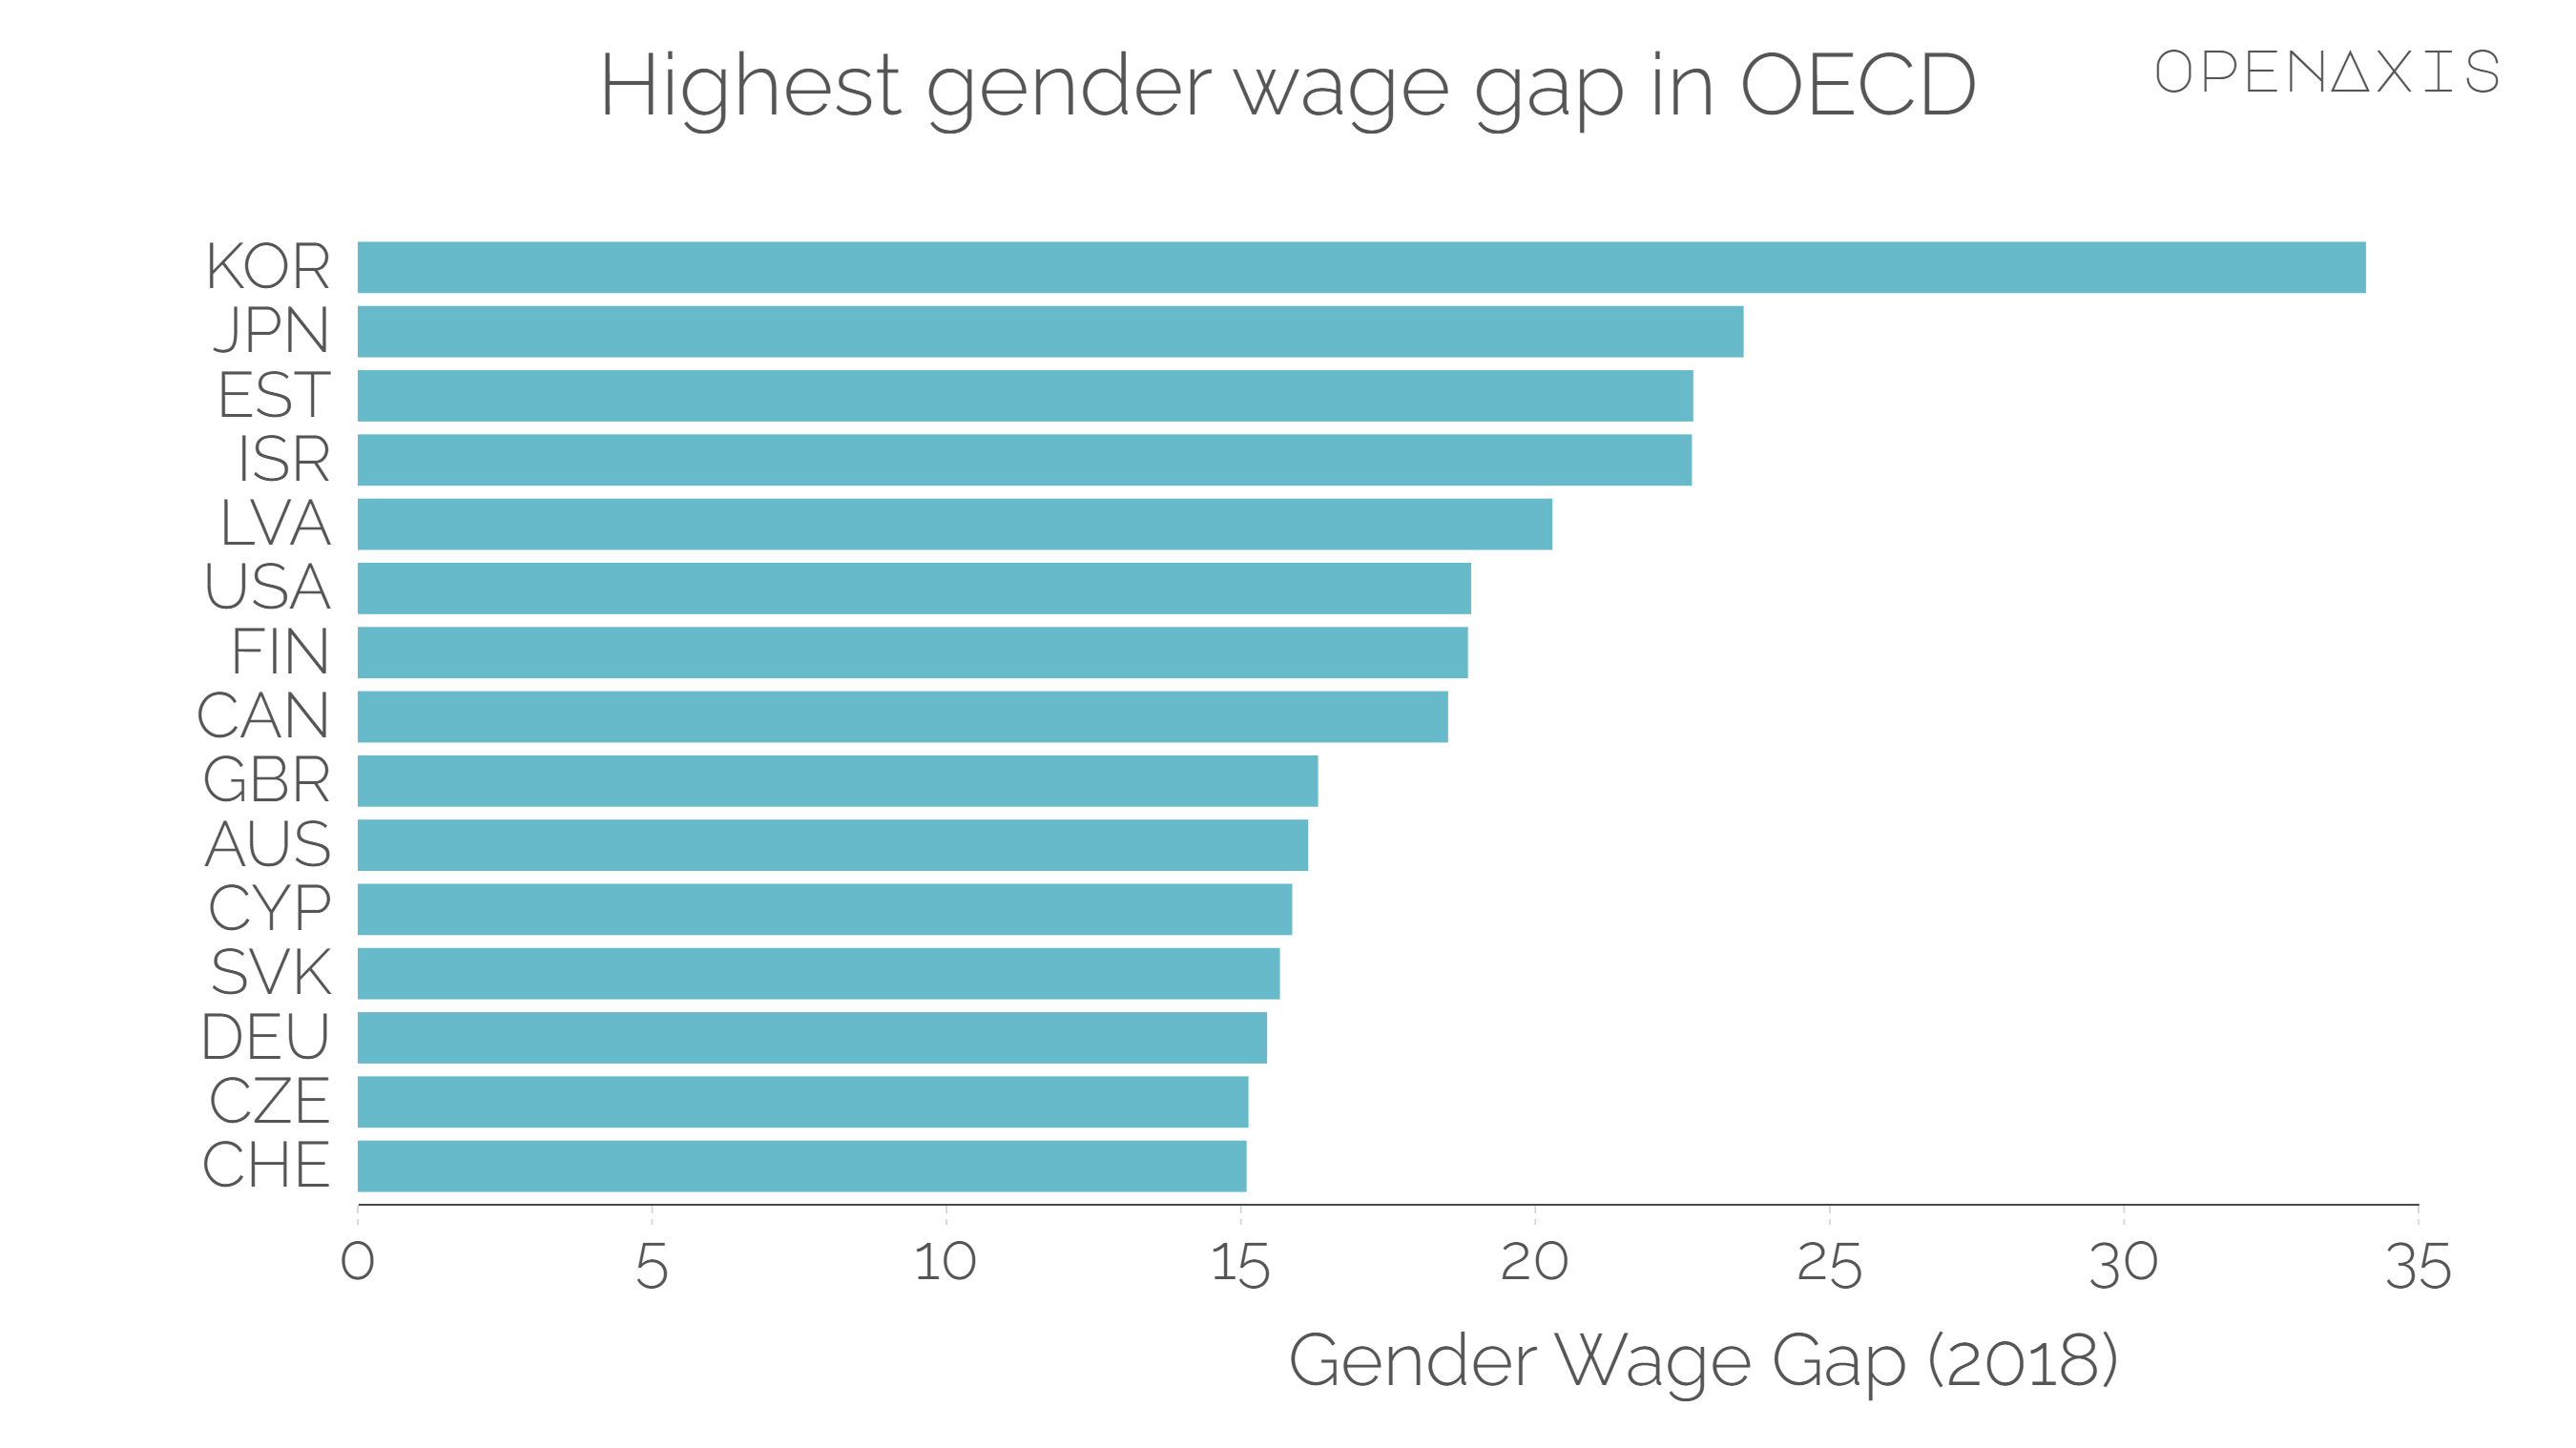 "Highest gender wage gap in OECD"